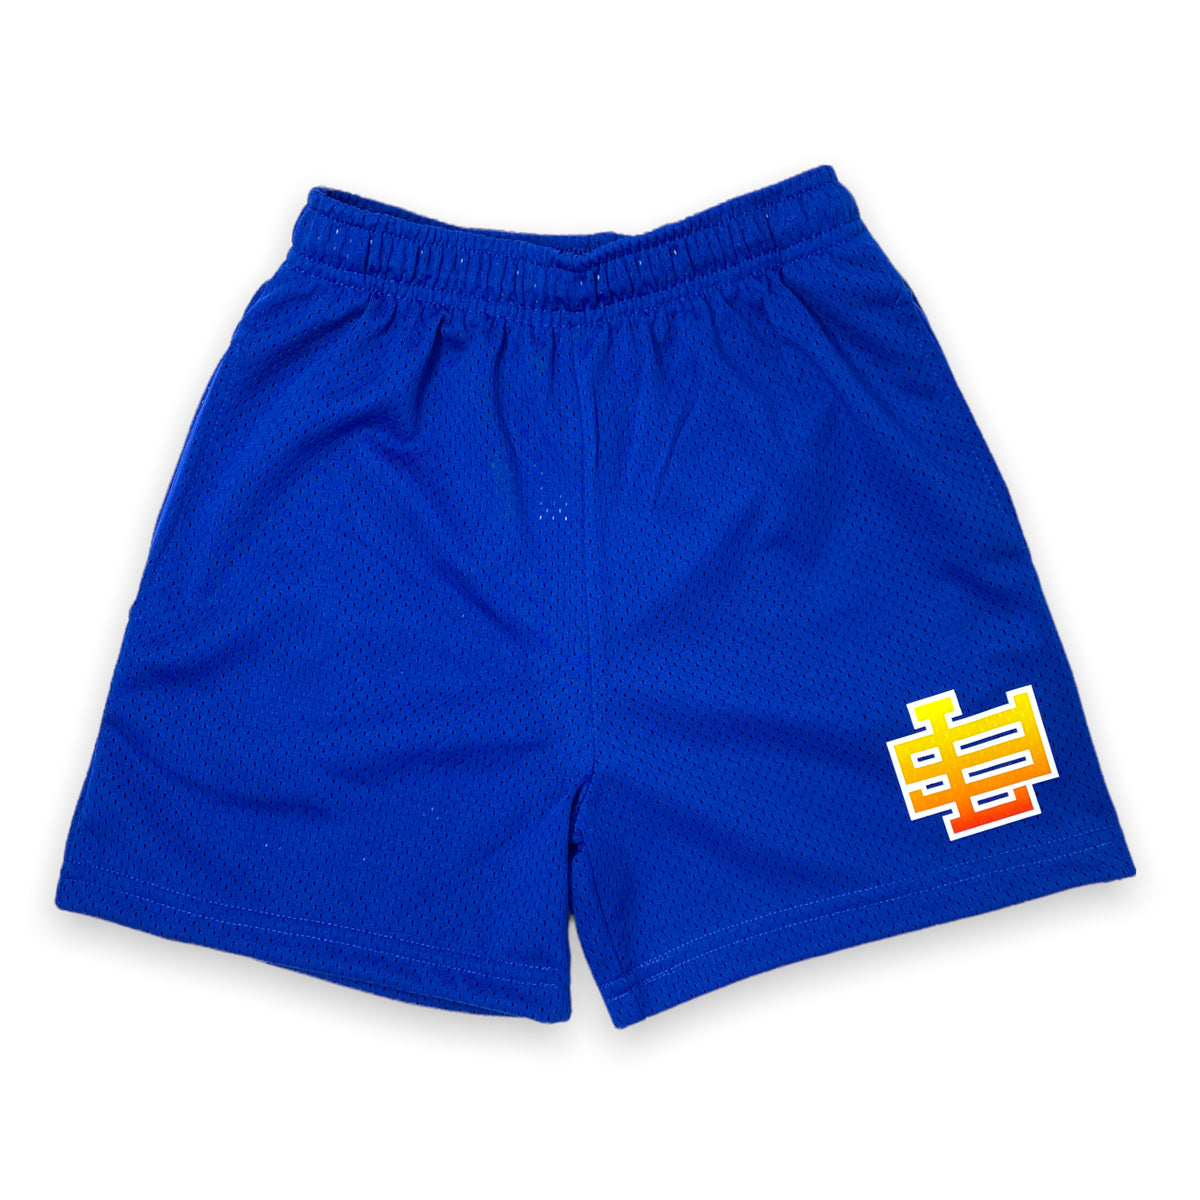 Little Giants Kids Shorts (Royal Blue)